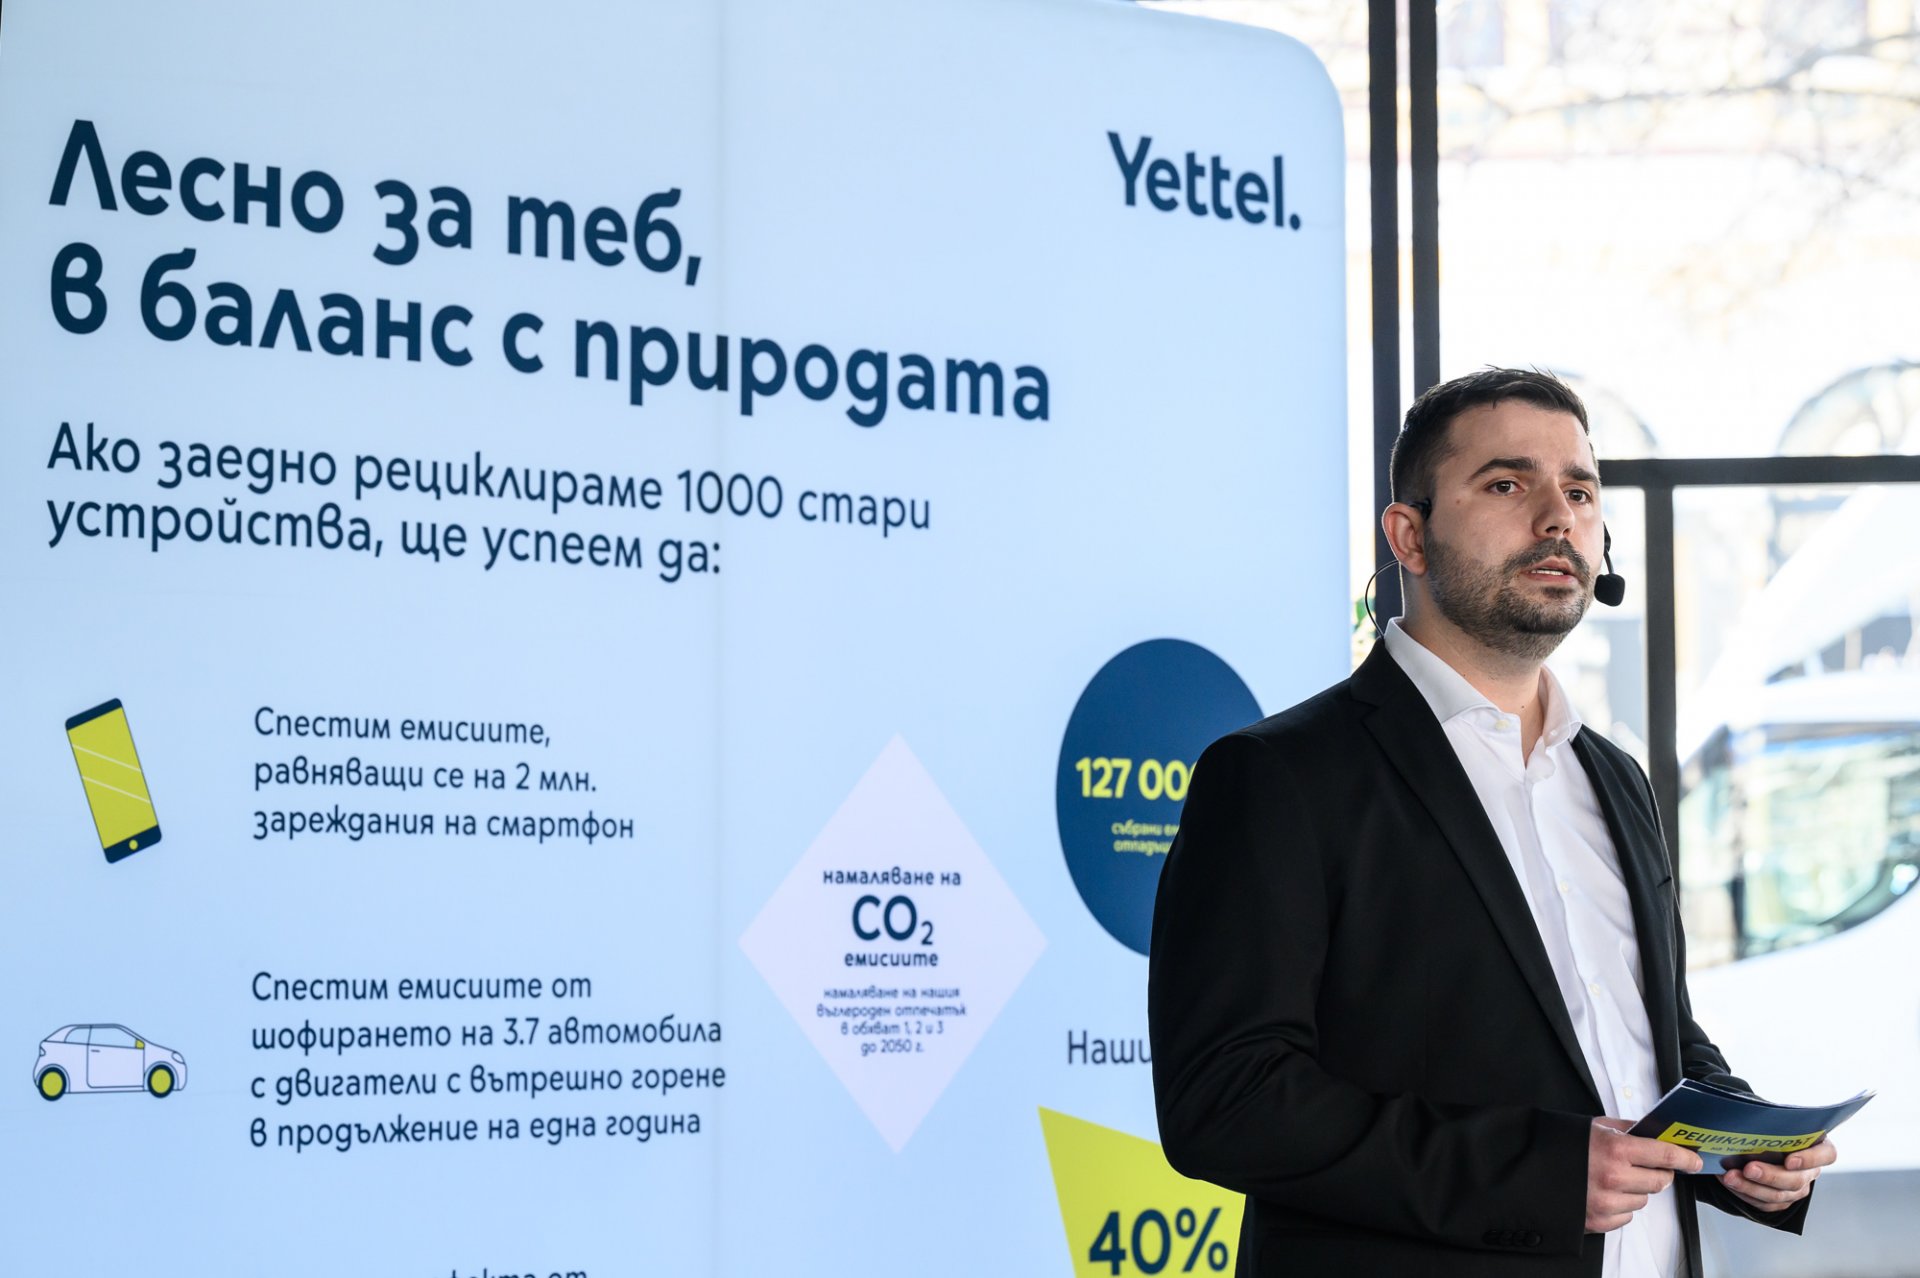  Боян Иванович, директор „Корпоративни комуникации" в Yettel